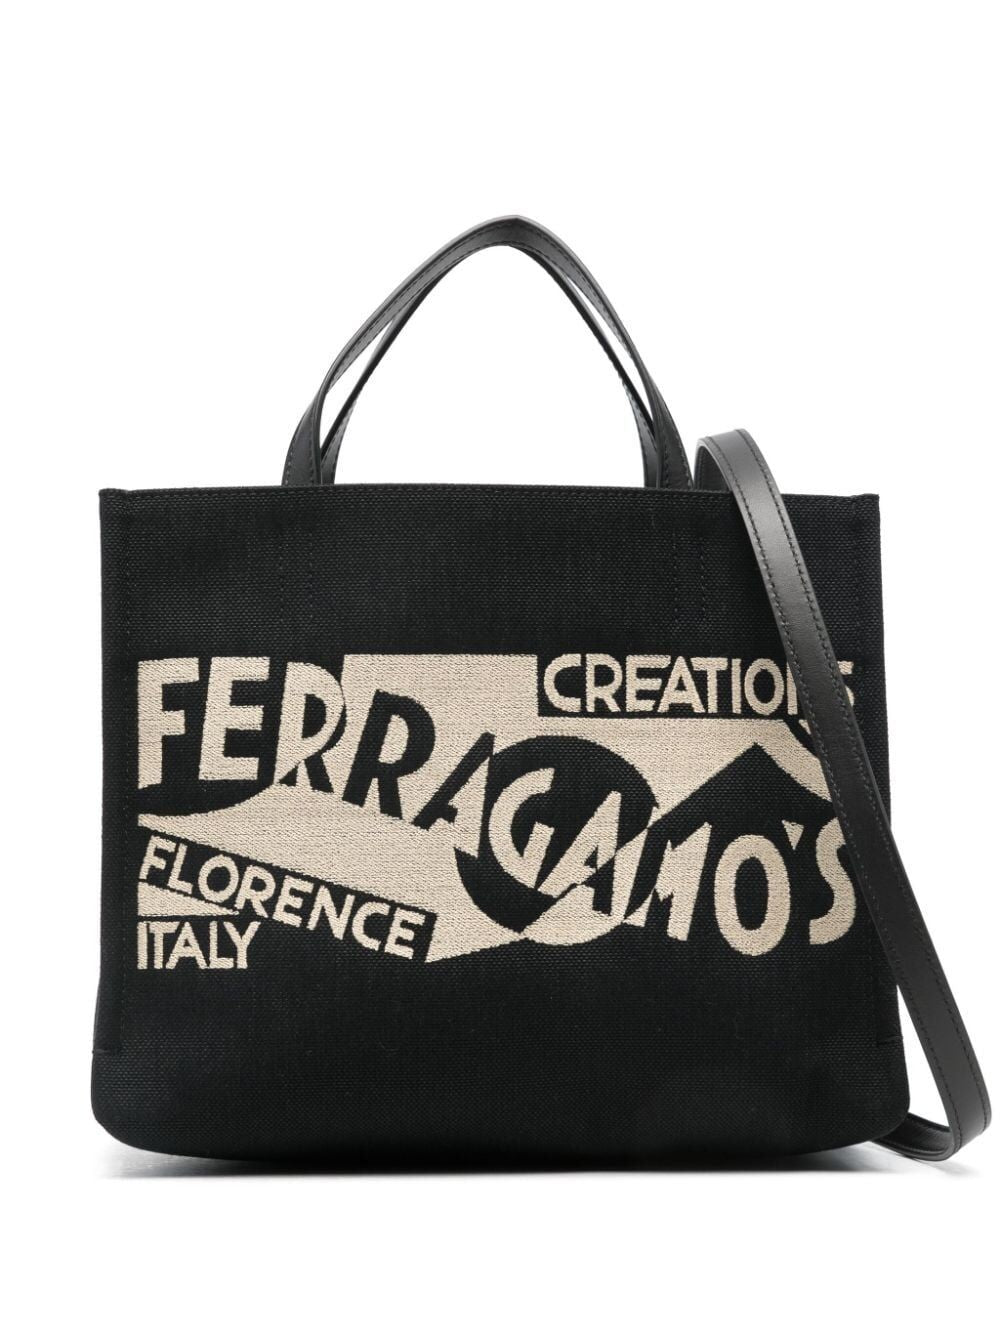 FERRAGAMO Elegant Black Canvas Small Tote Handbag for Women FW24